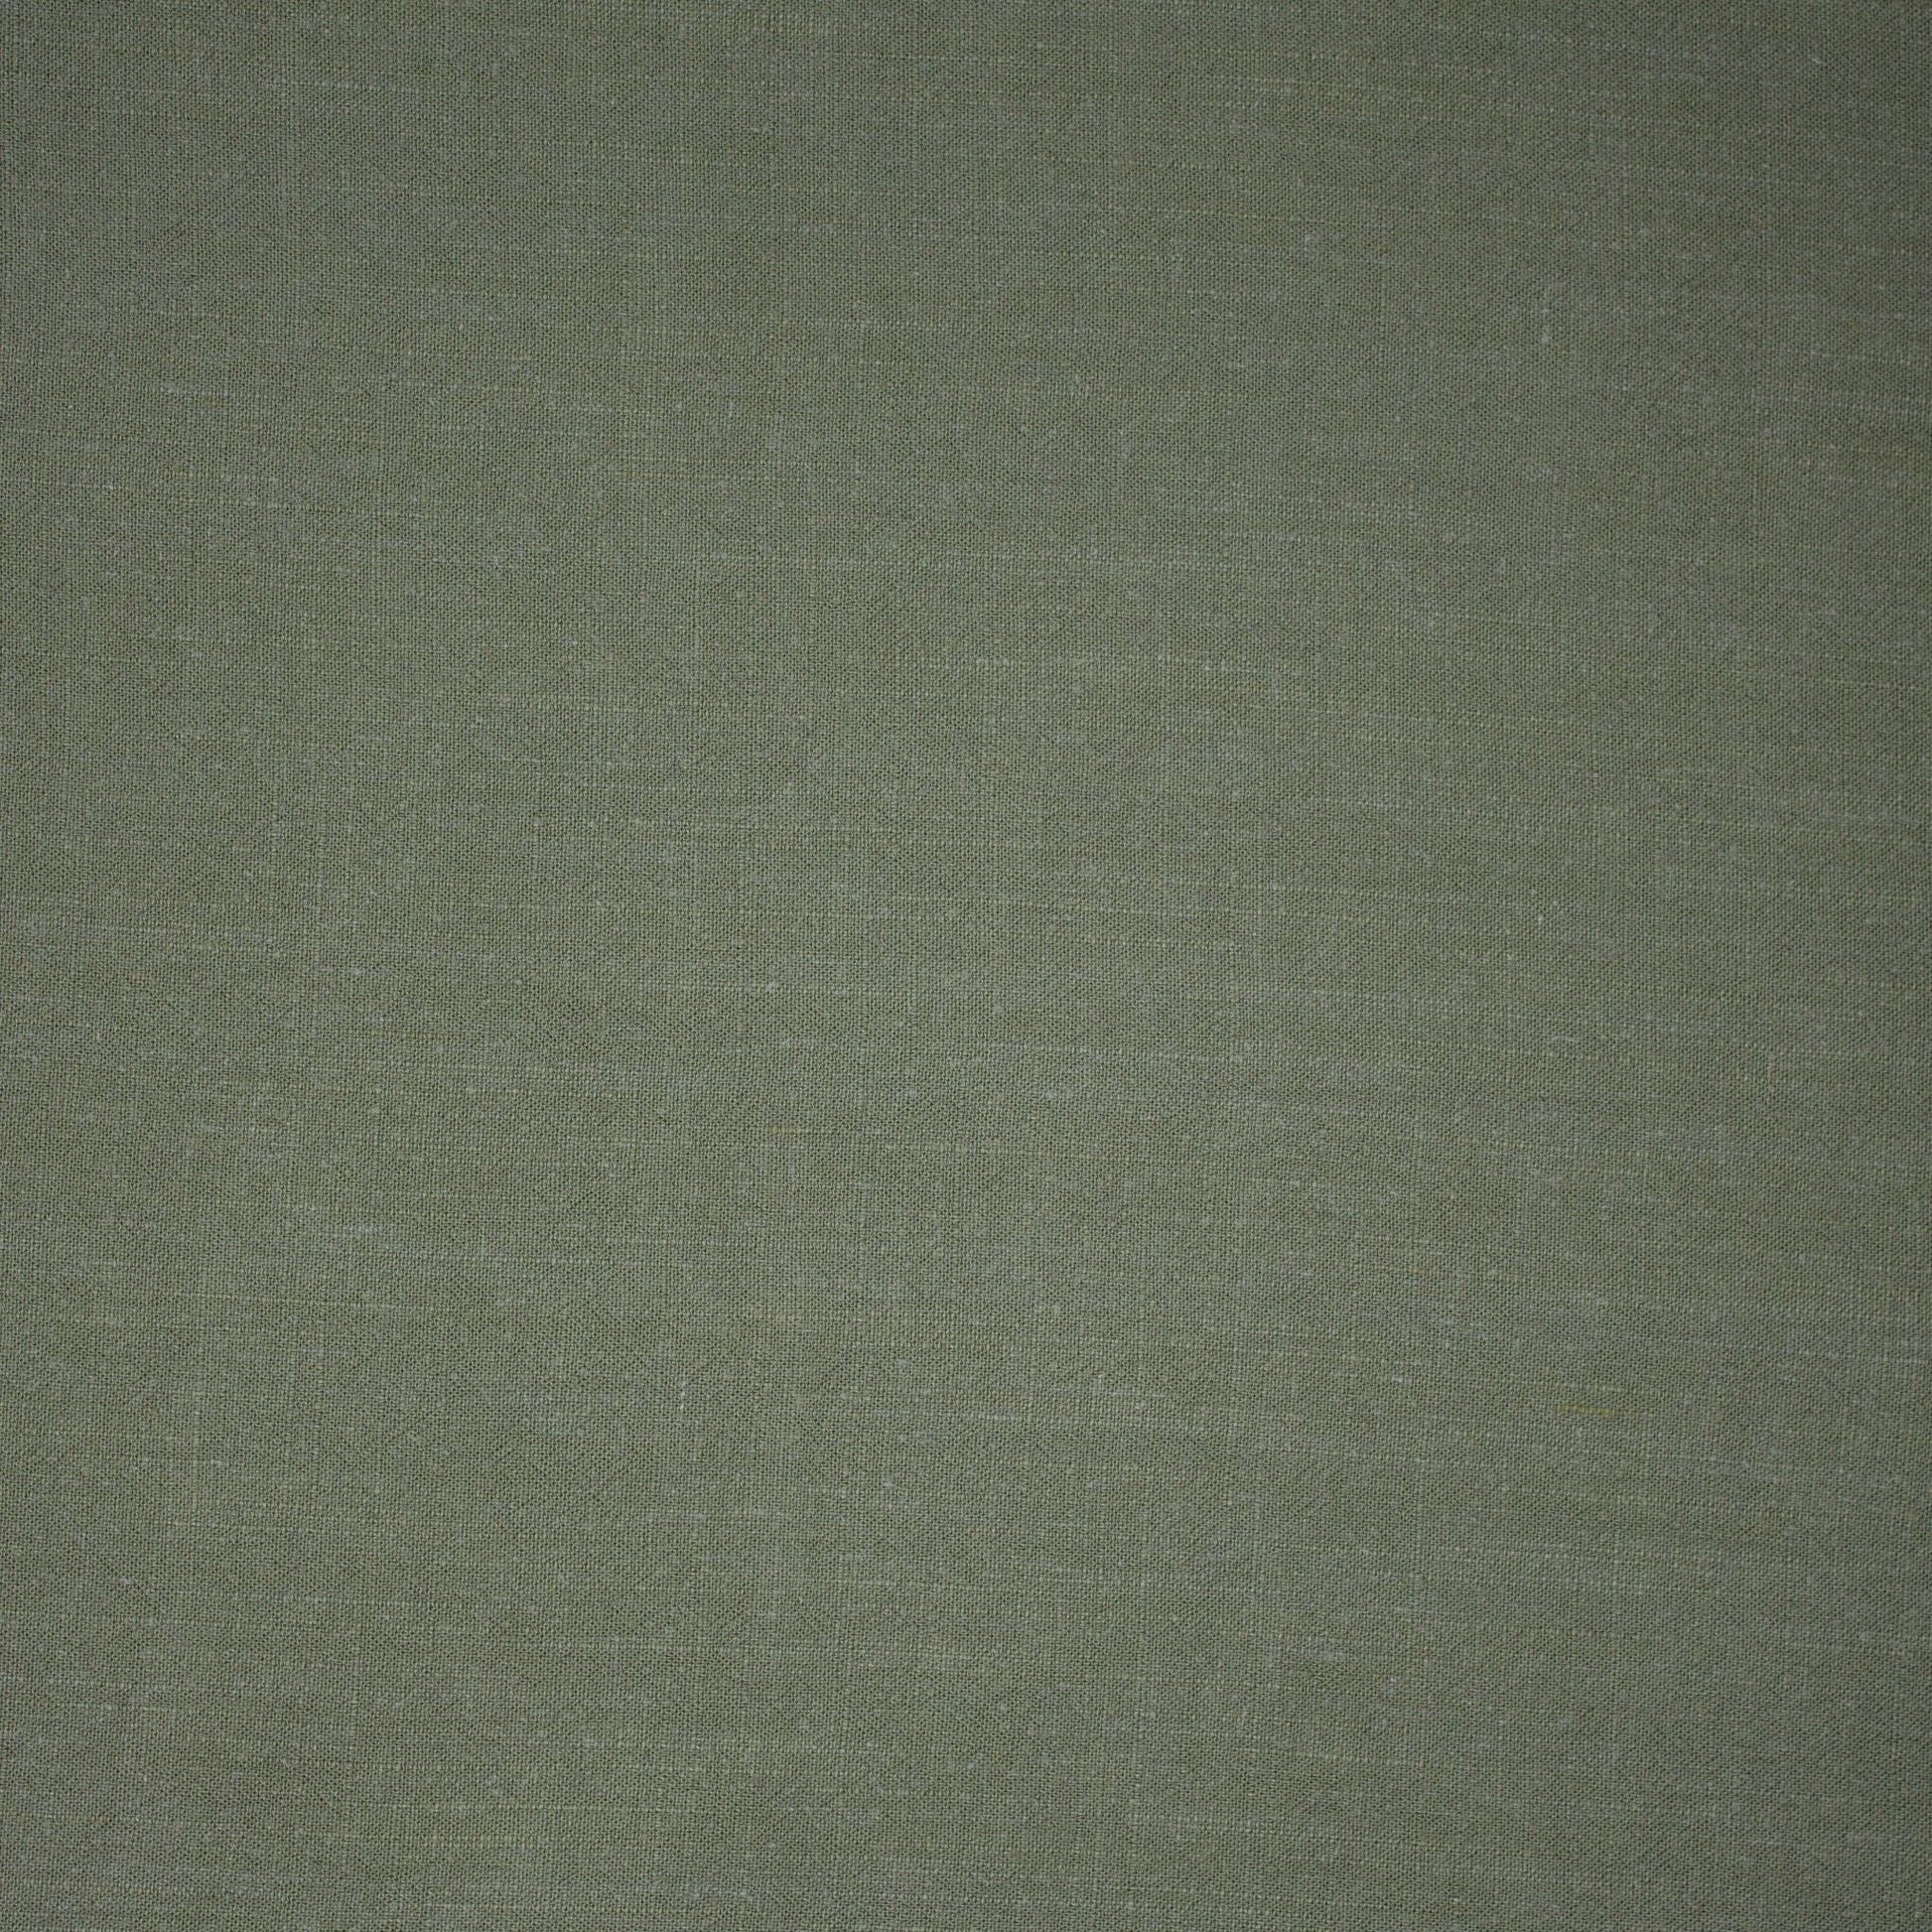 Ella Viscose Linen Noil Olive ½ yd-Fabric-Spool of Thread